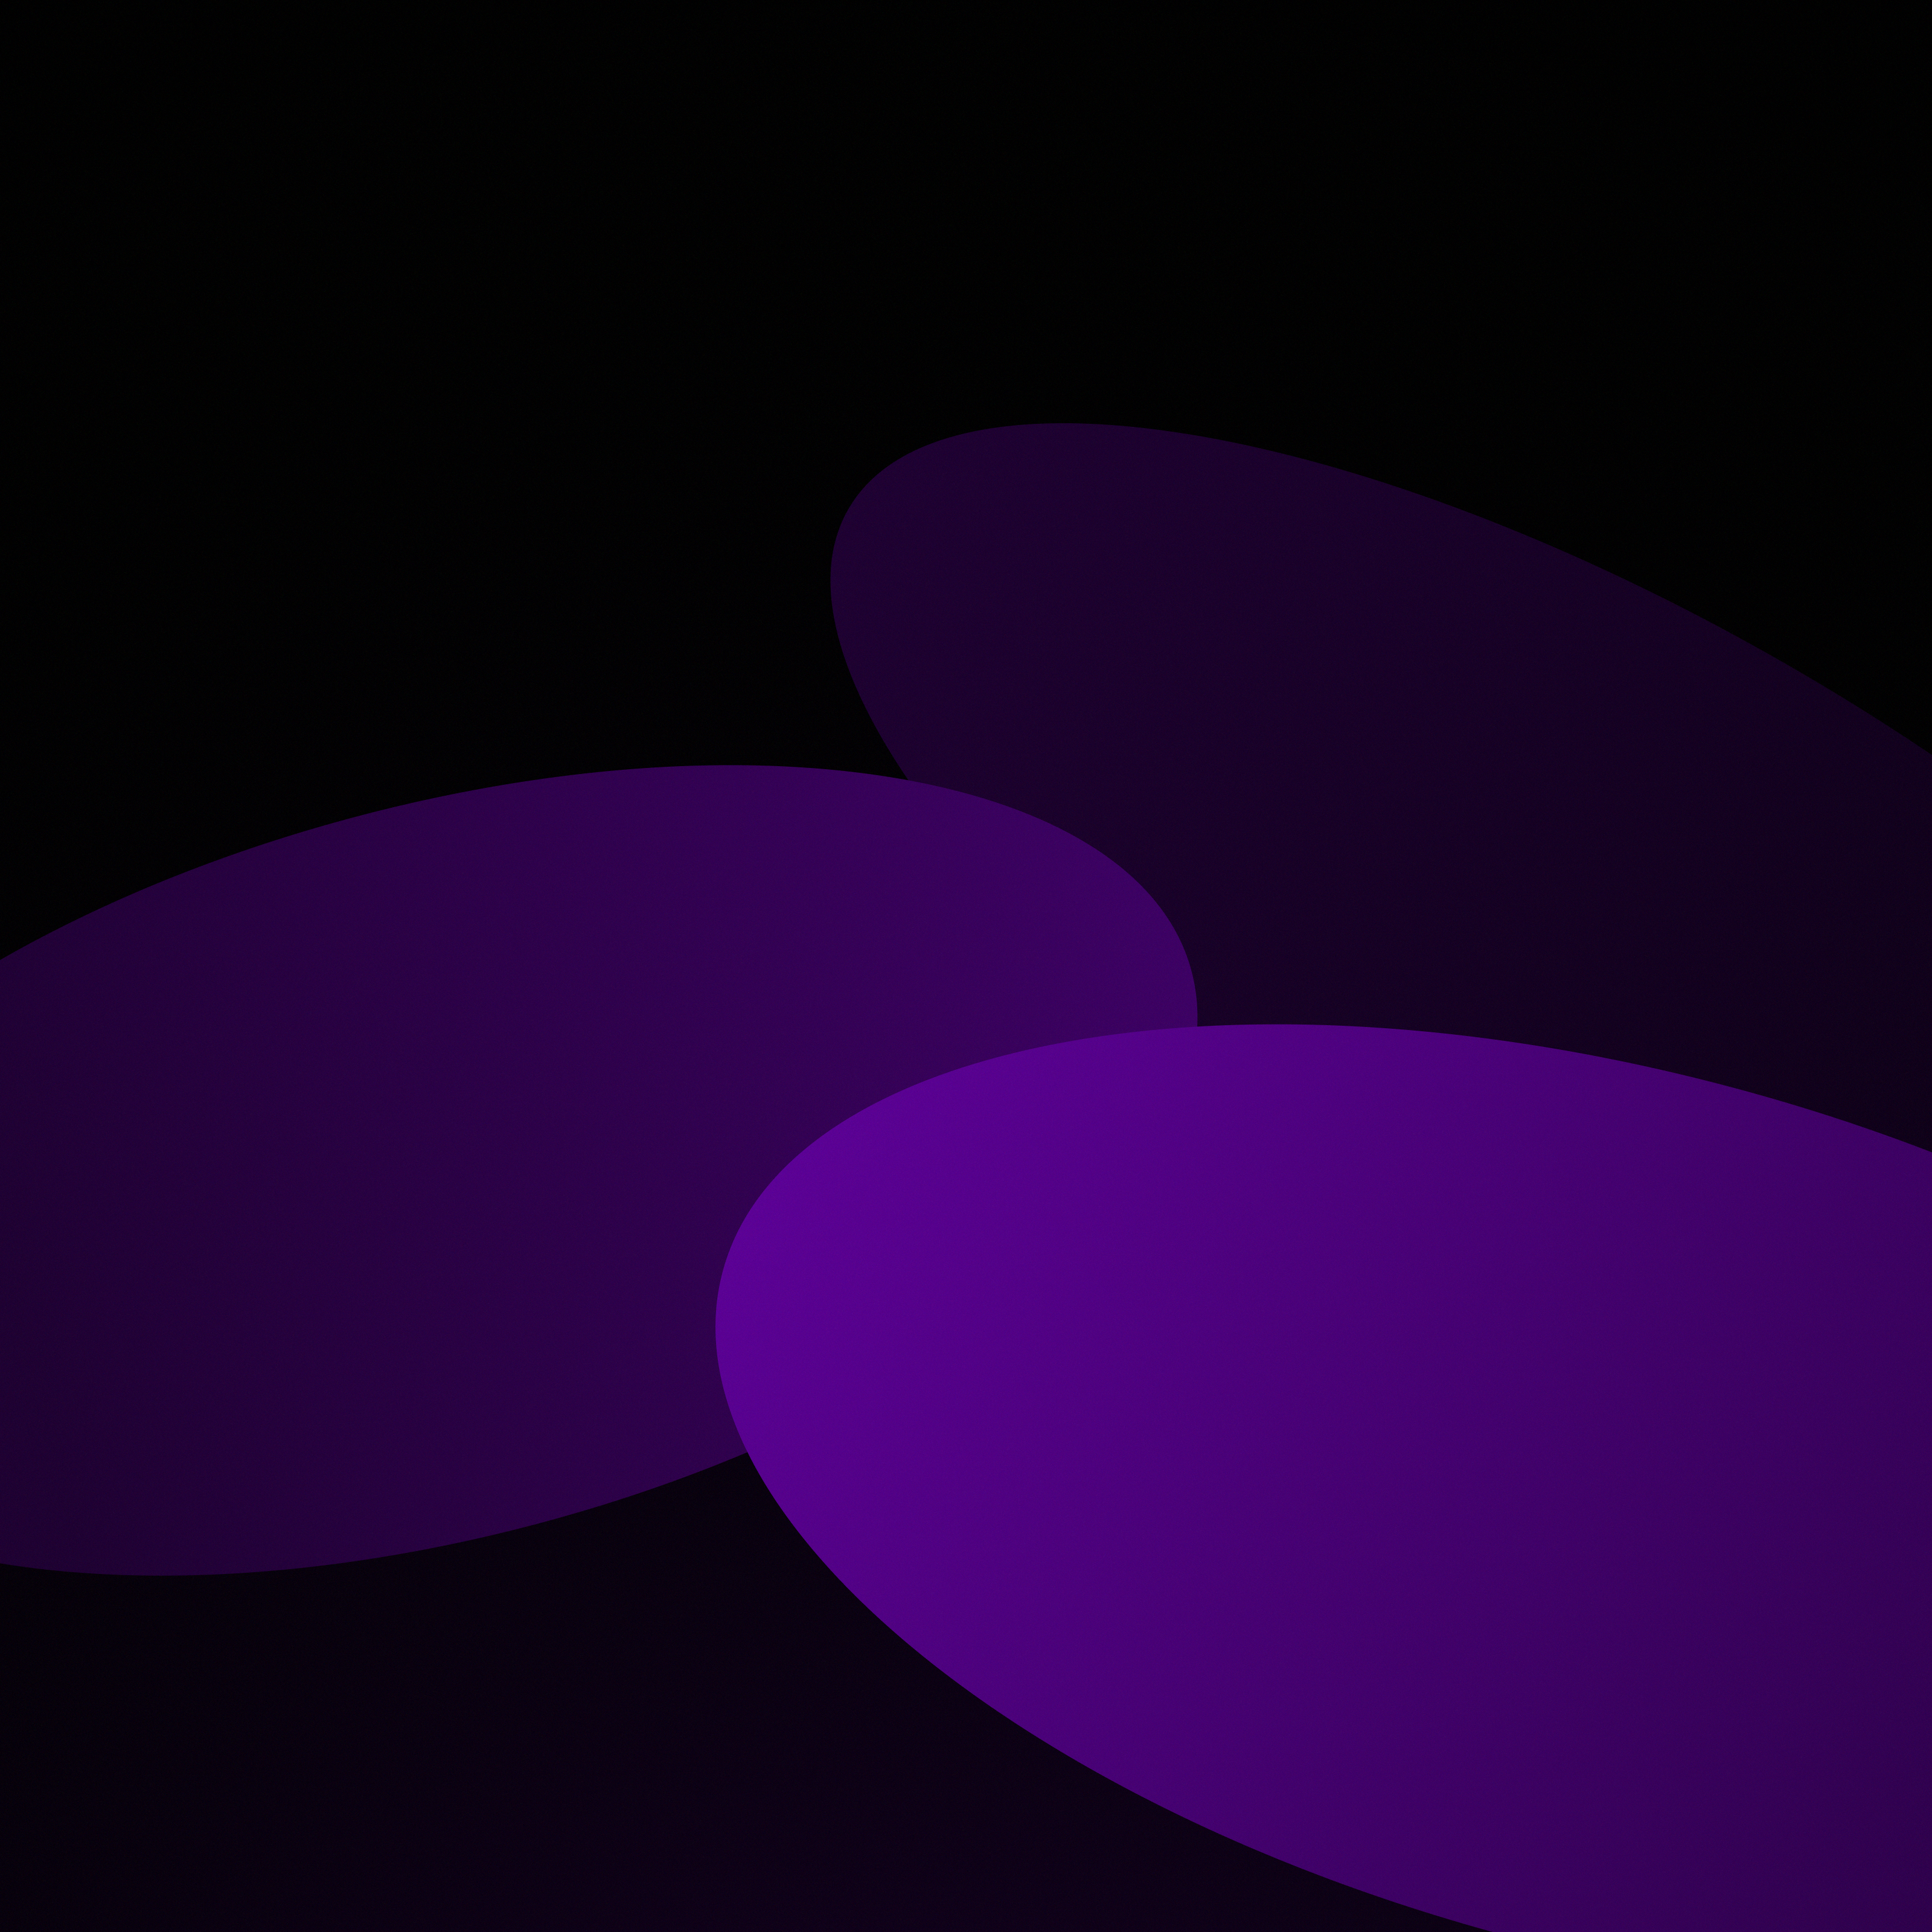 General 3200x3200 petals minimalism simple background purple